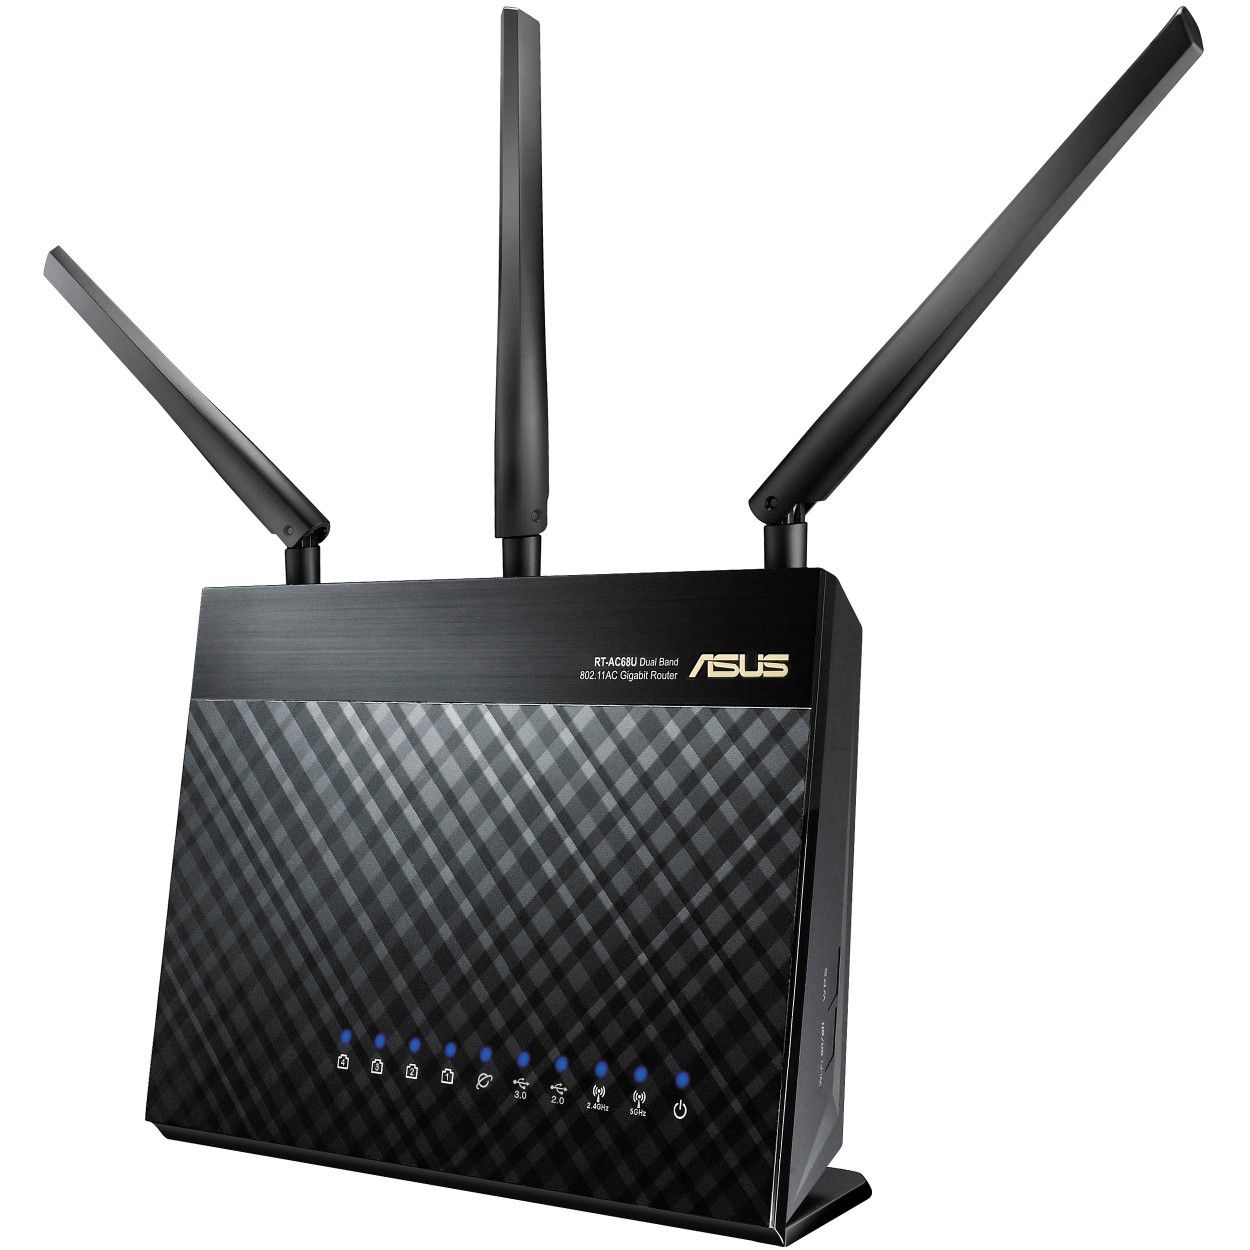 Asus AC1900 RT-AC68U Dual Band Gigabit WiFi Router